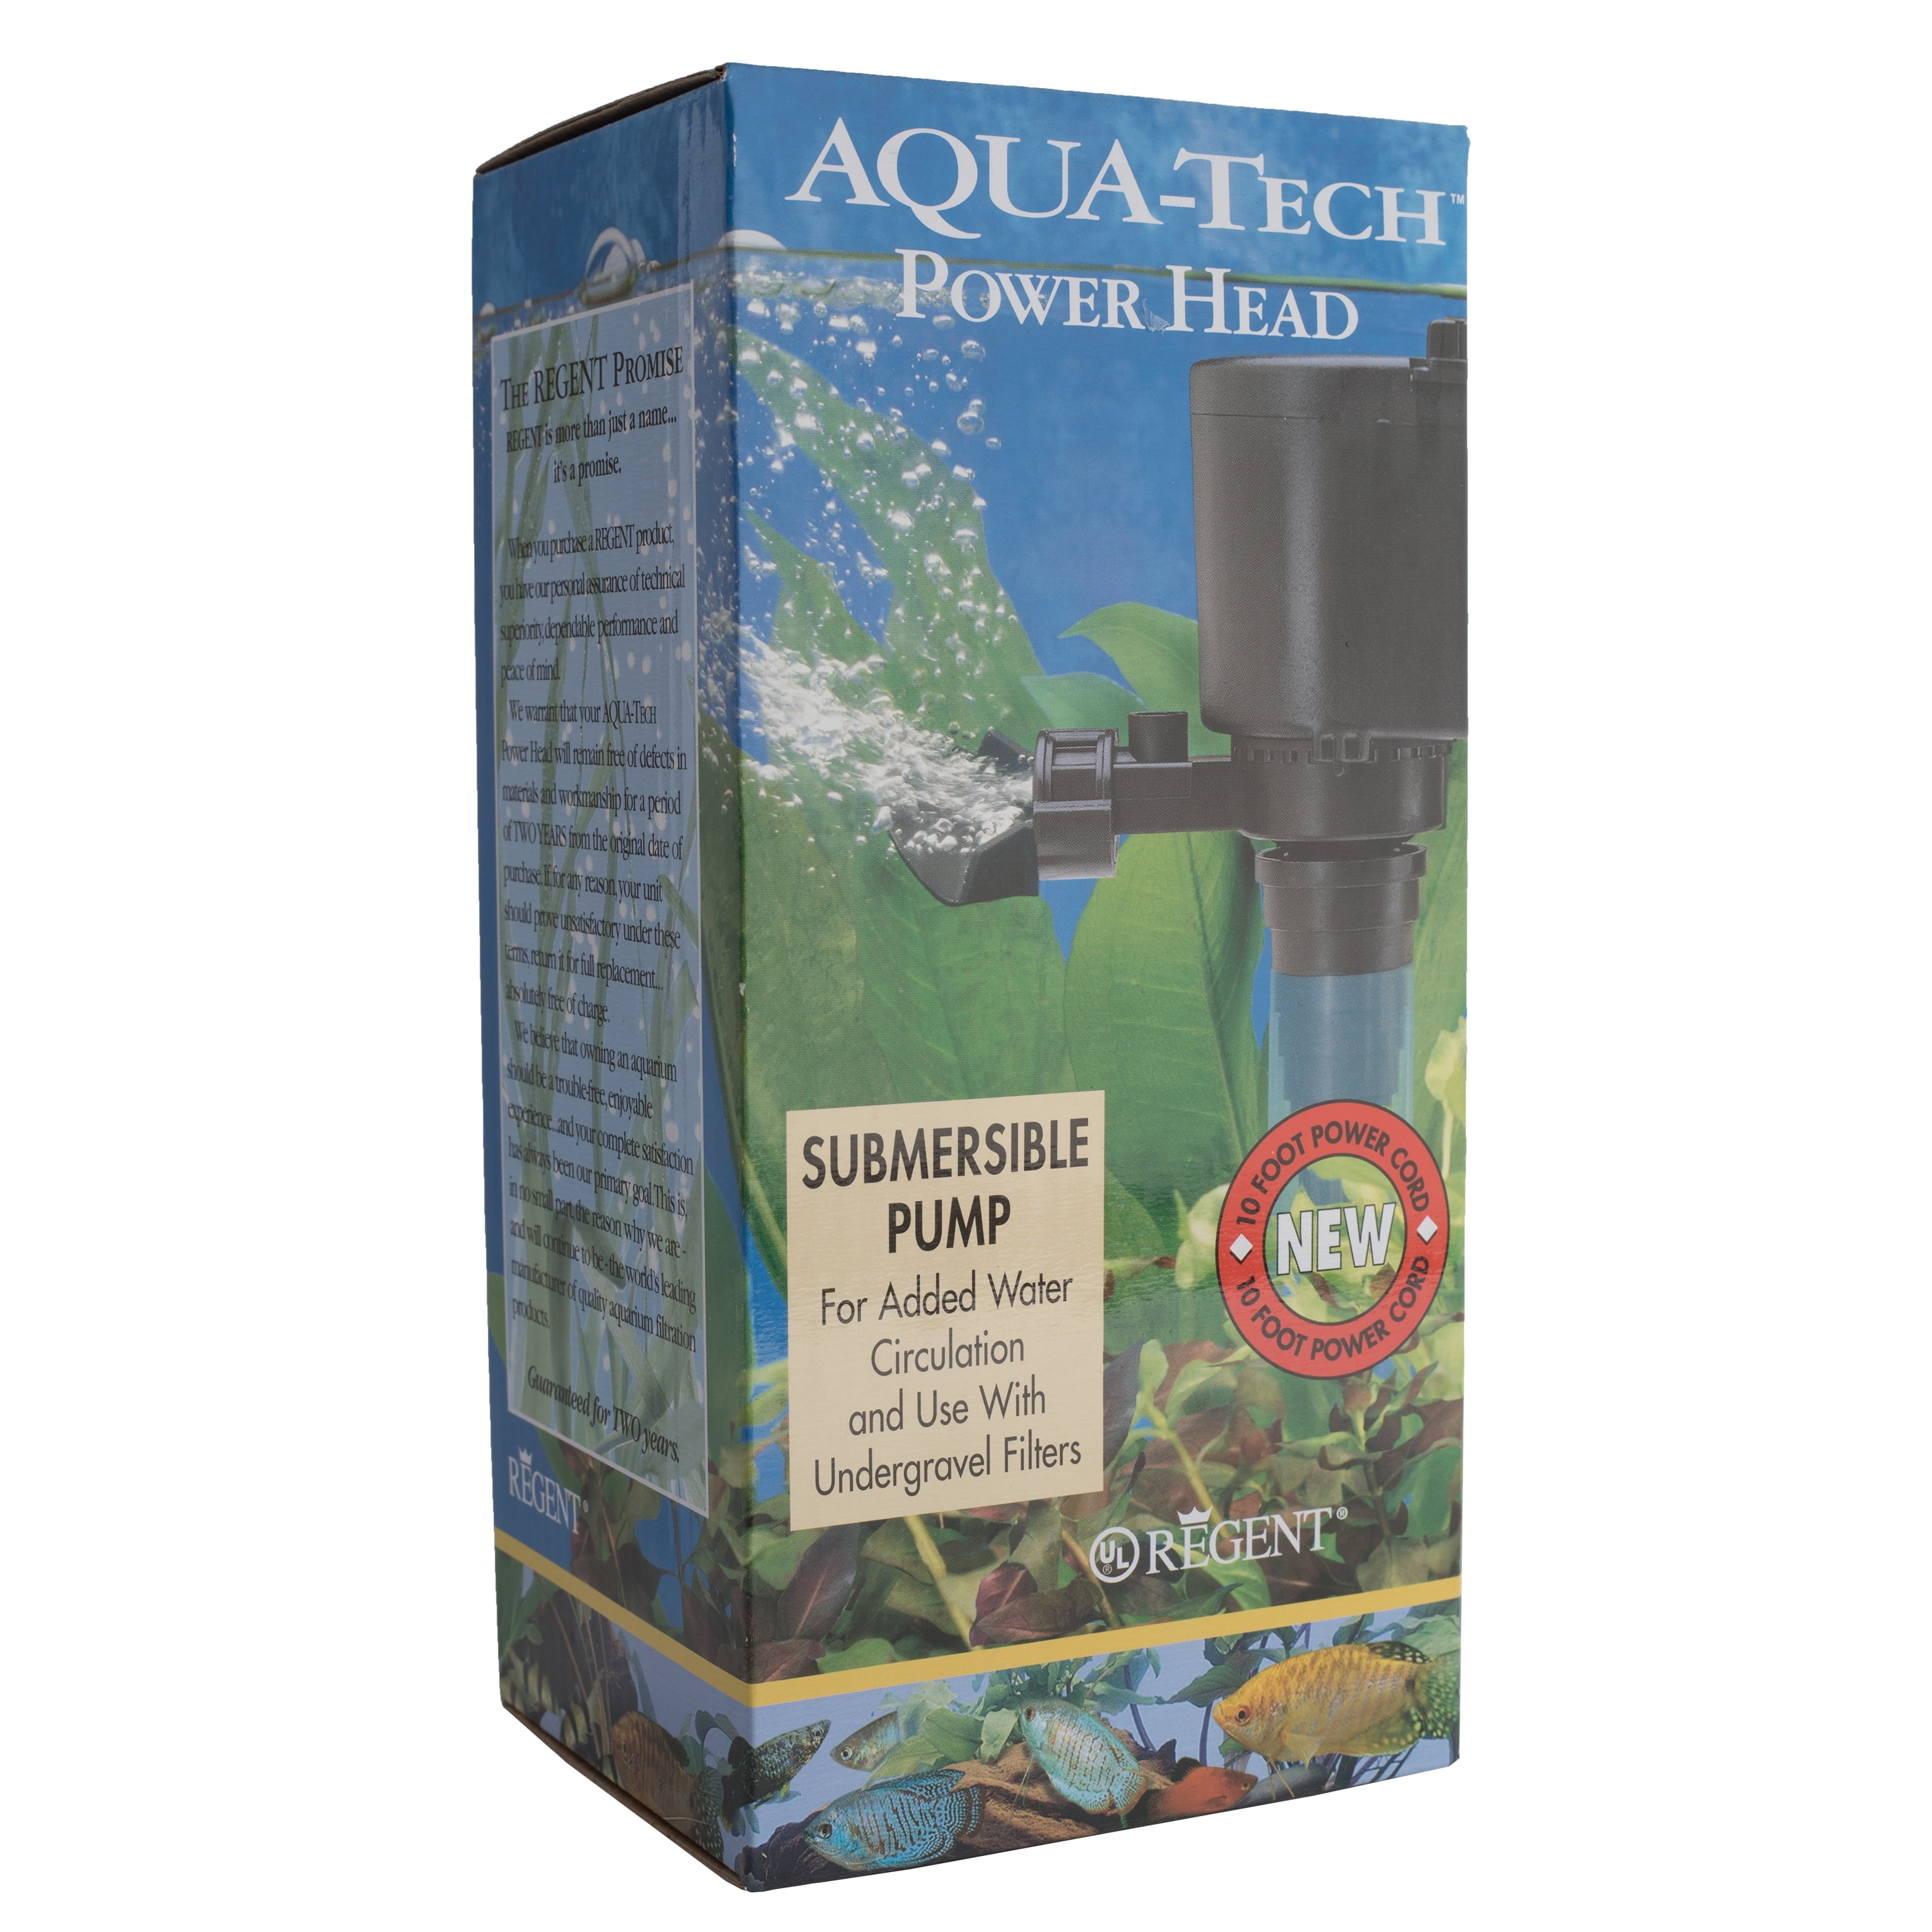 Aqua-Tech Power Head Submersible Black Pump for Aquariums